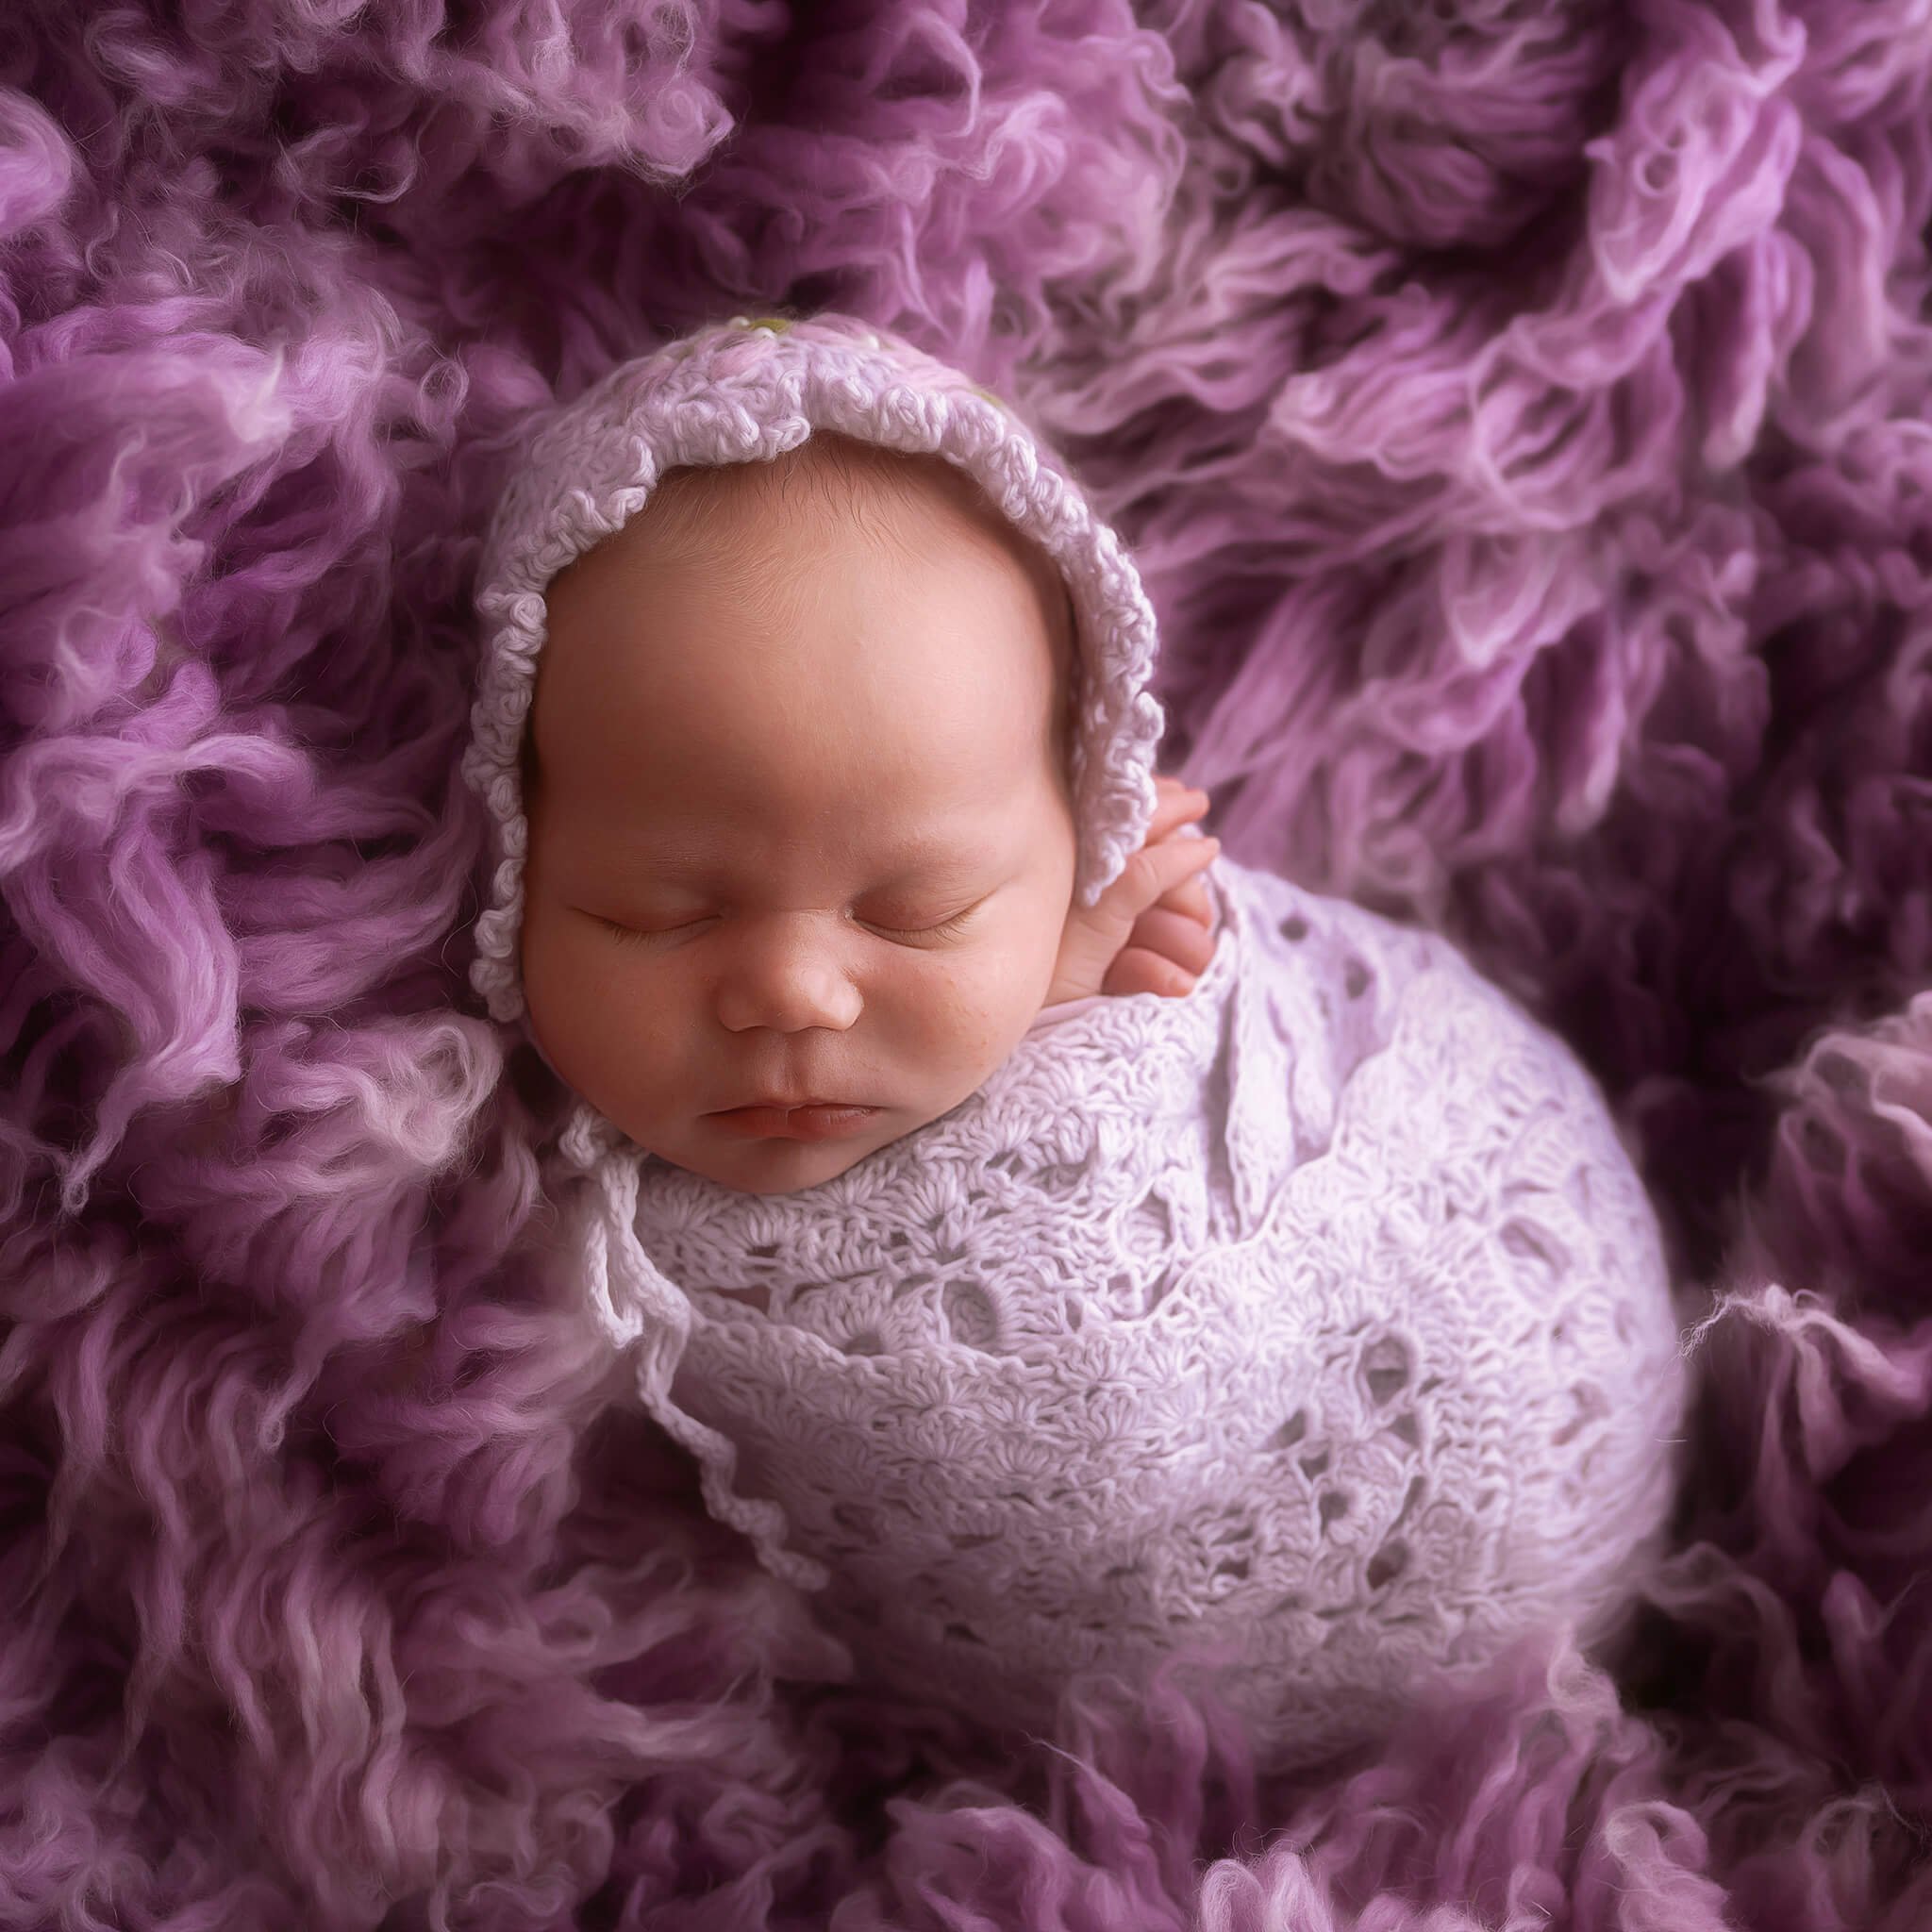 Newborn in crochet bonnet and wrap set.jpg